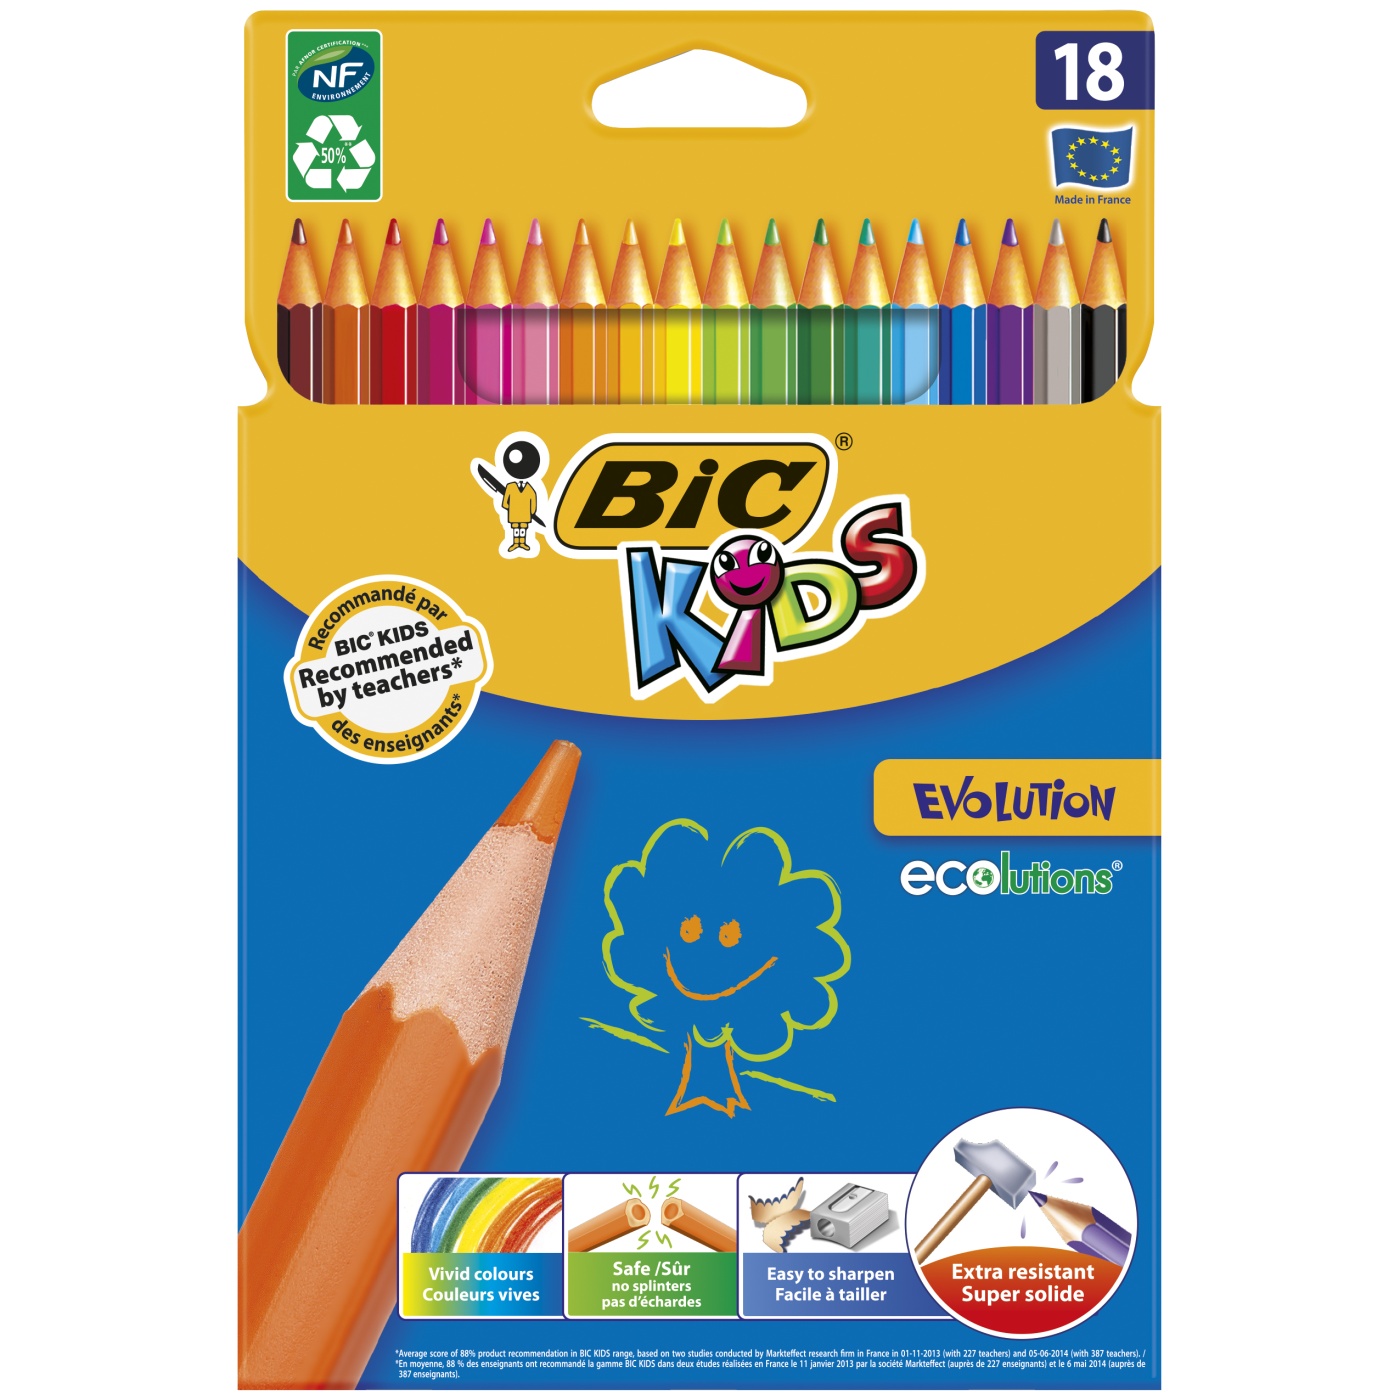 Packs of 6 12,18 x 12 Pencils NEW Sealed Bic Kids Evolution Pencils 